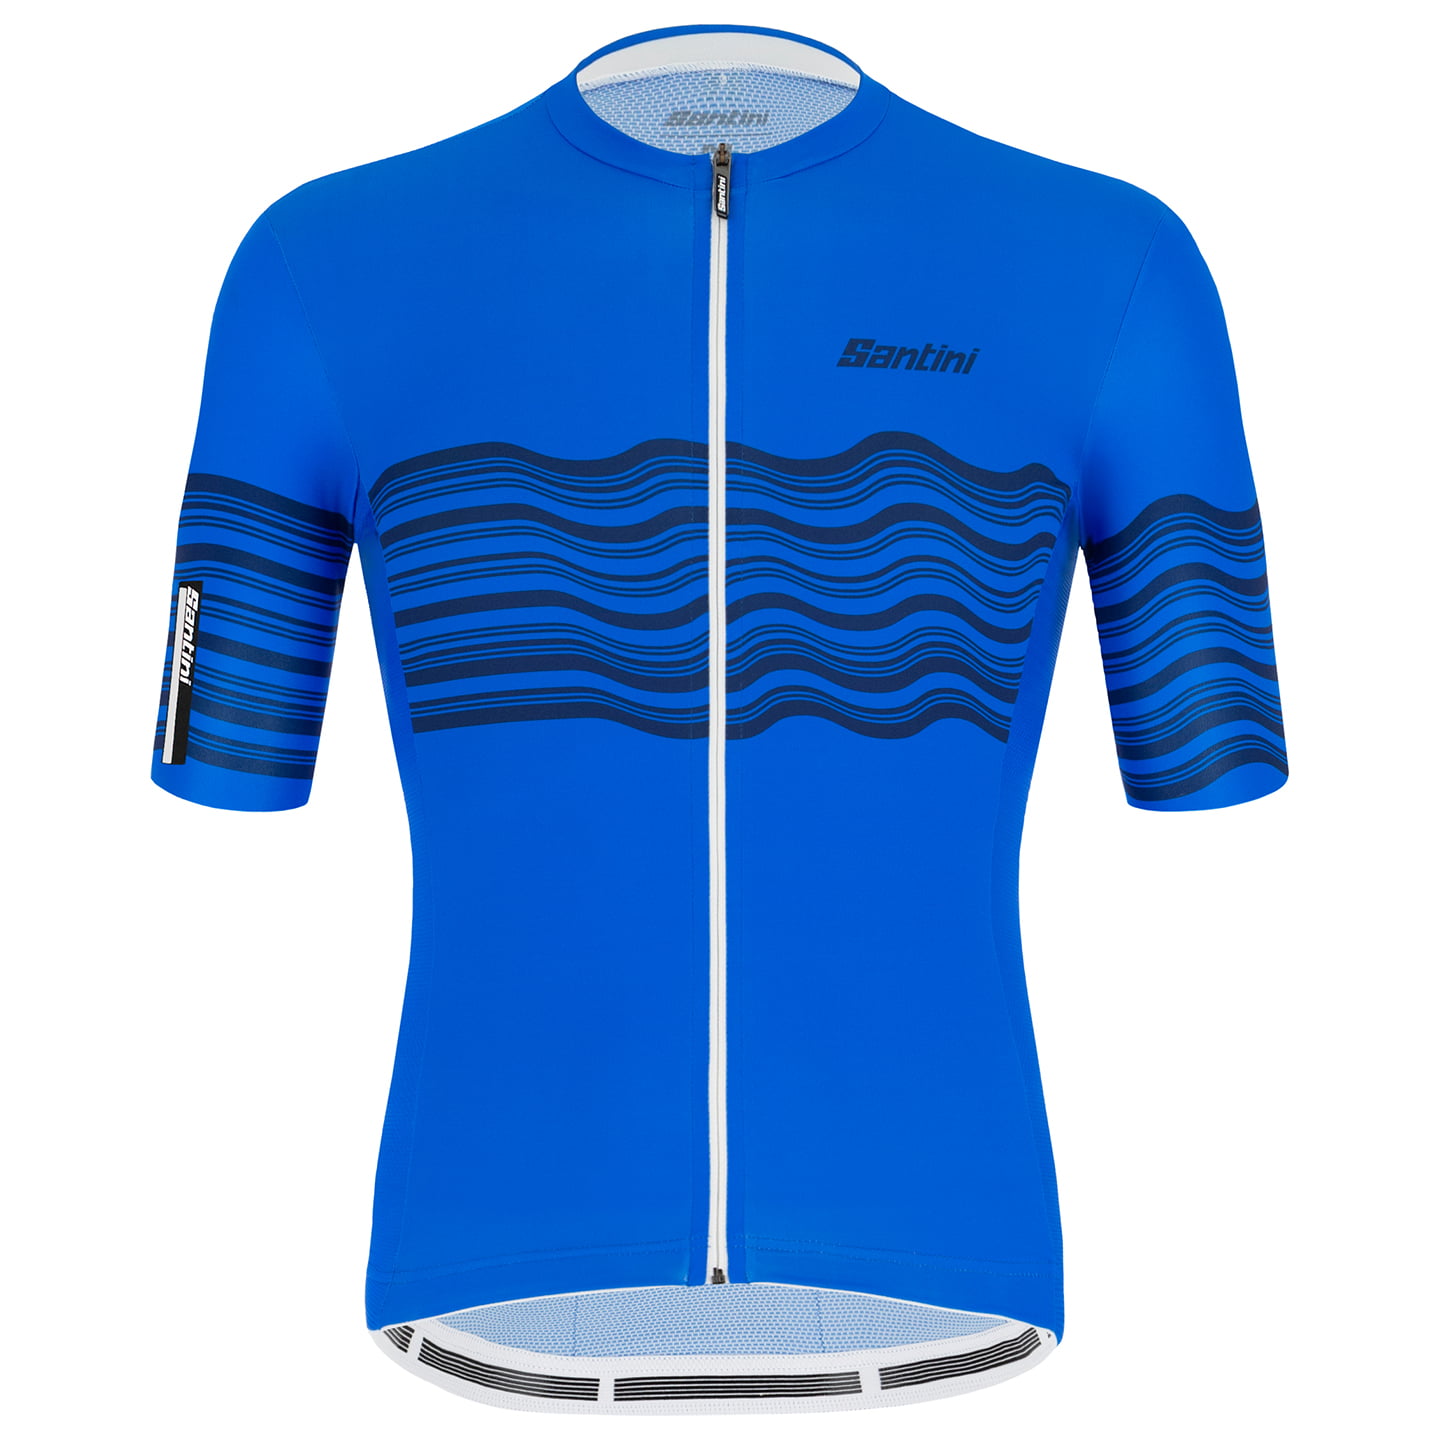 SANTINI Tono Profilo Short Sleeve Jersey Short Sleeve Jersey, for men, size L, Cycling jersey, Cycling clothing